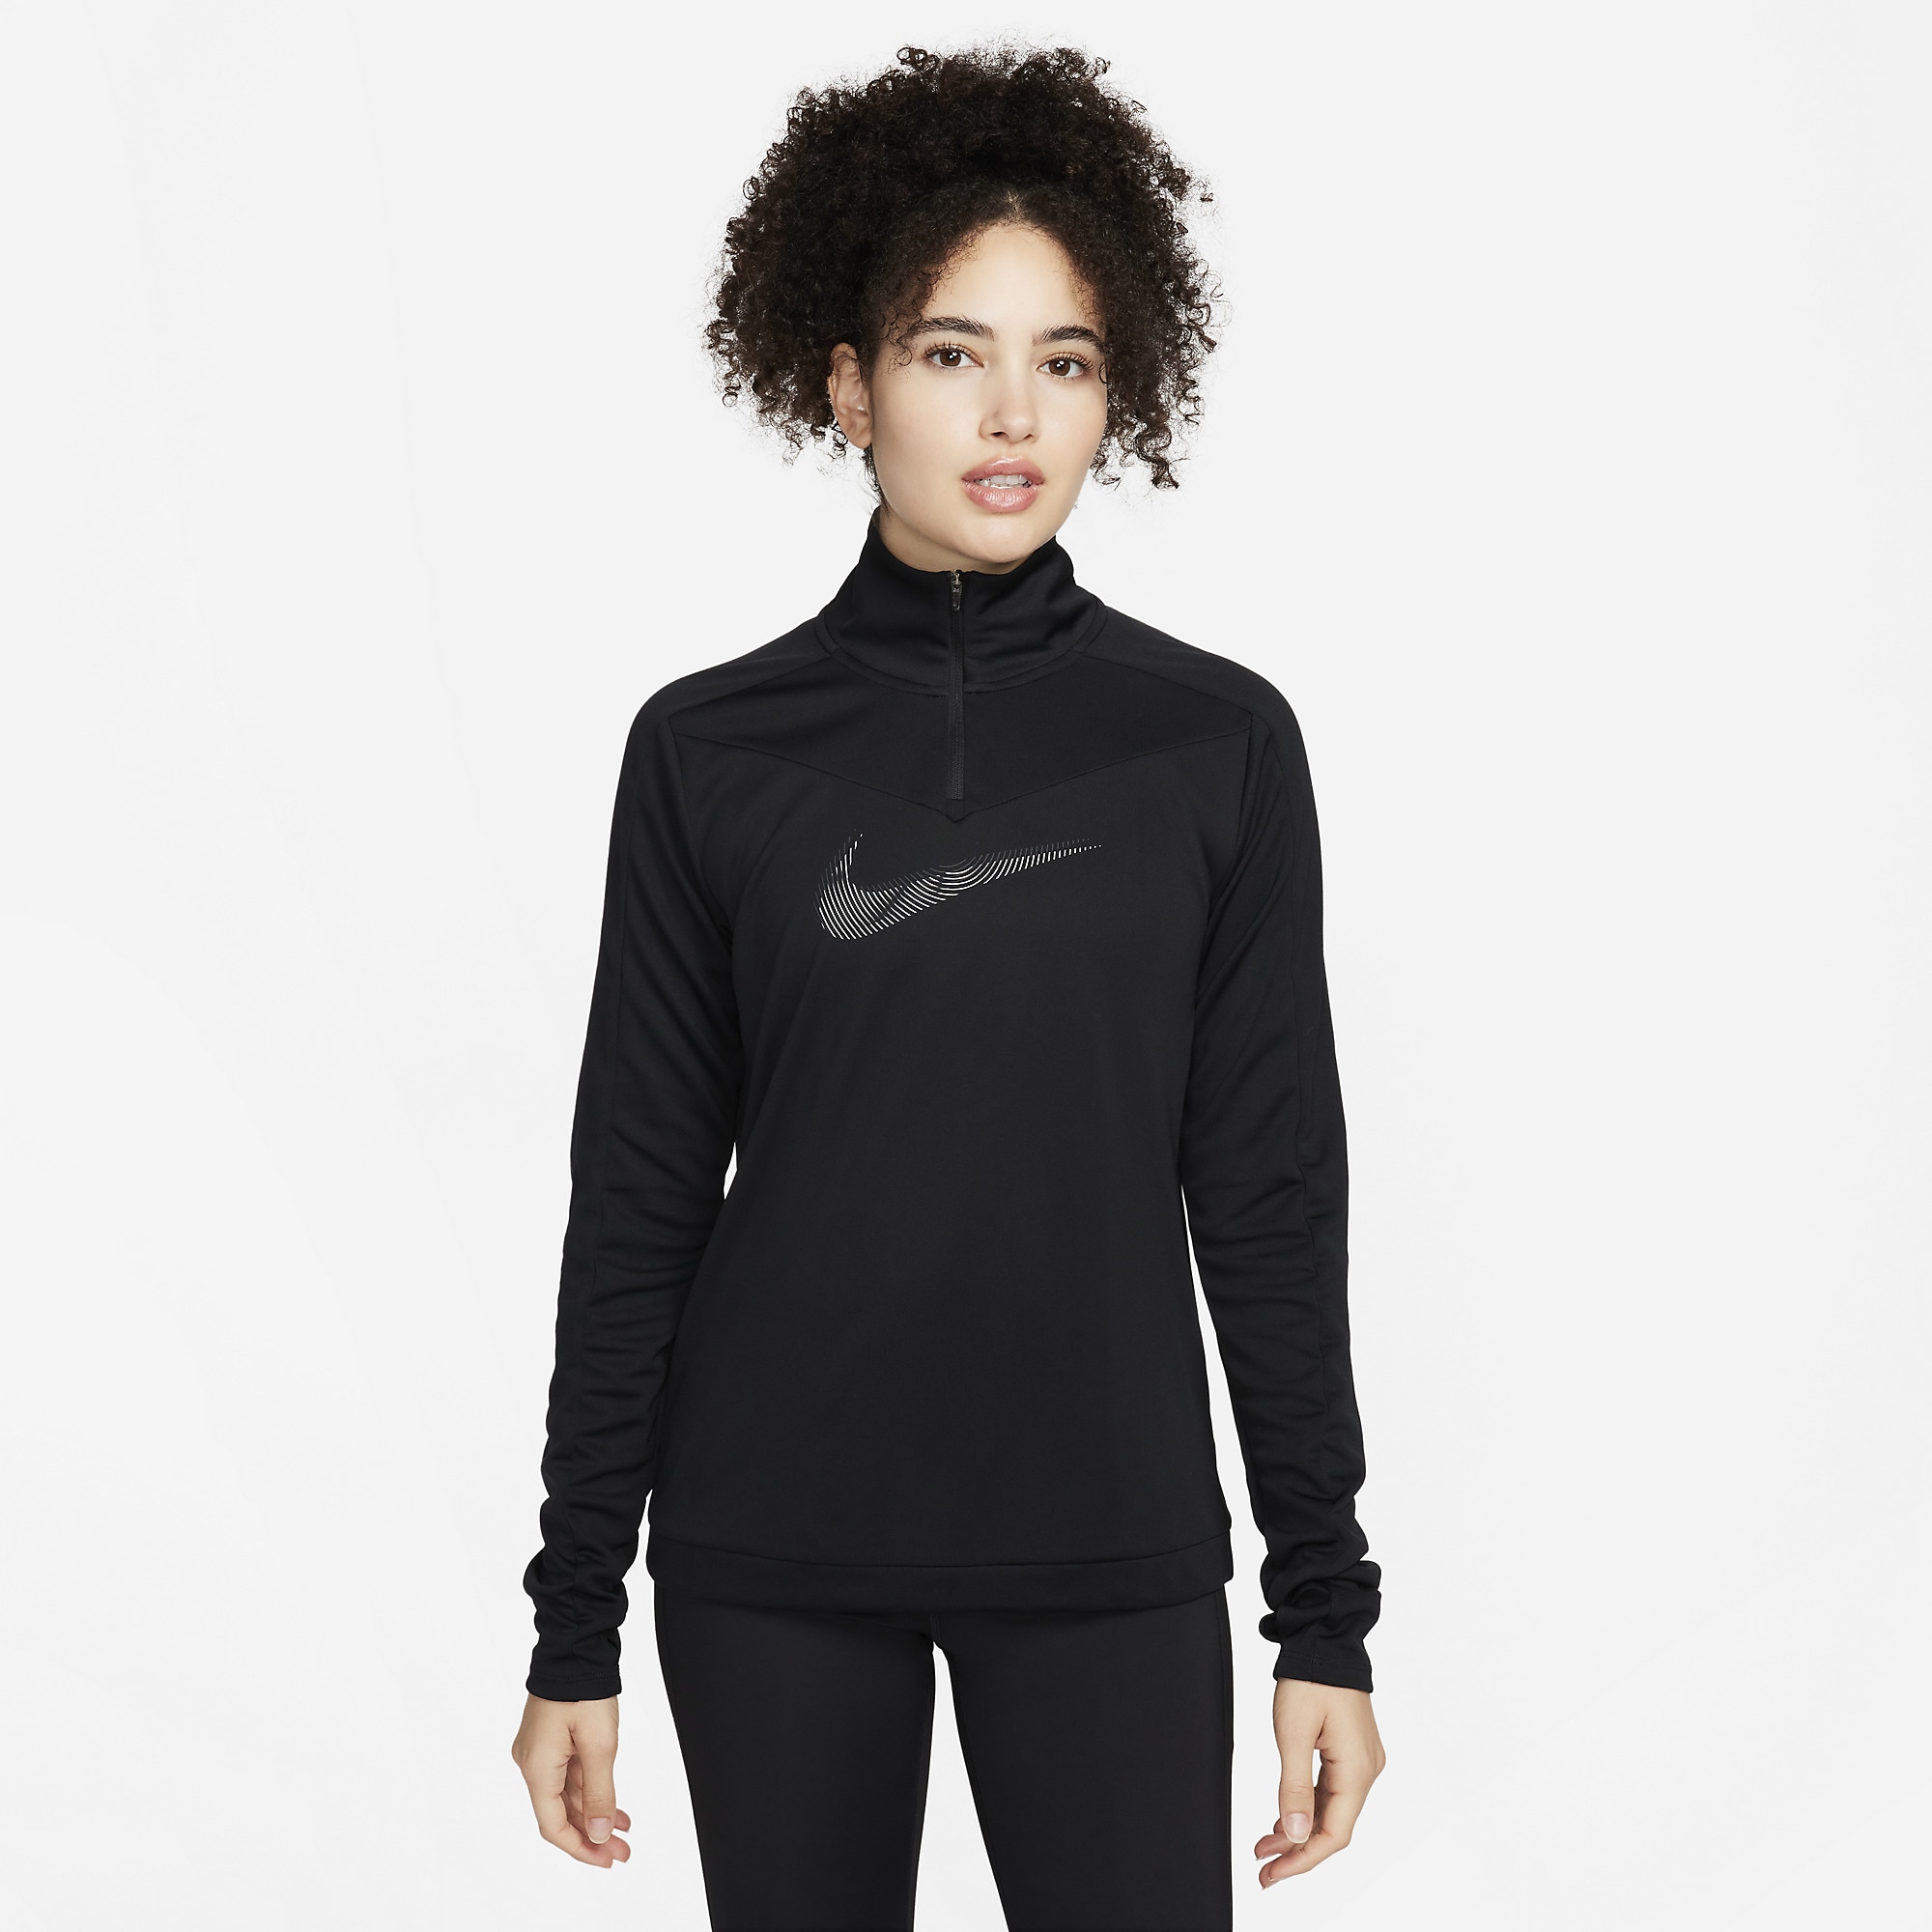 Nike Womens Dri-FIT Swoosh 1/4 Zip Top | Pro:Direct Running